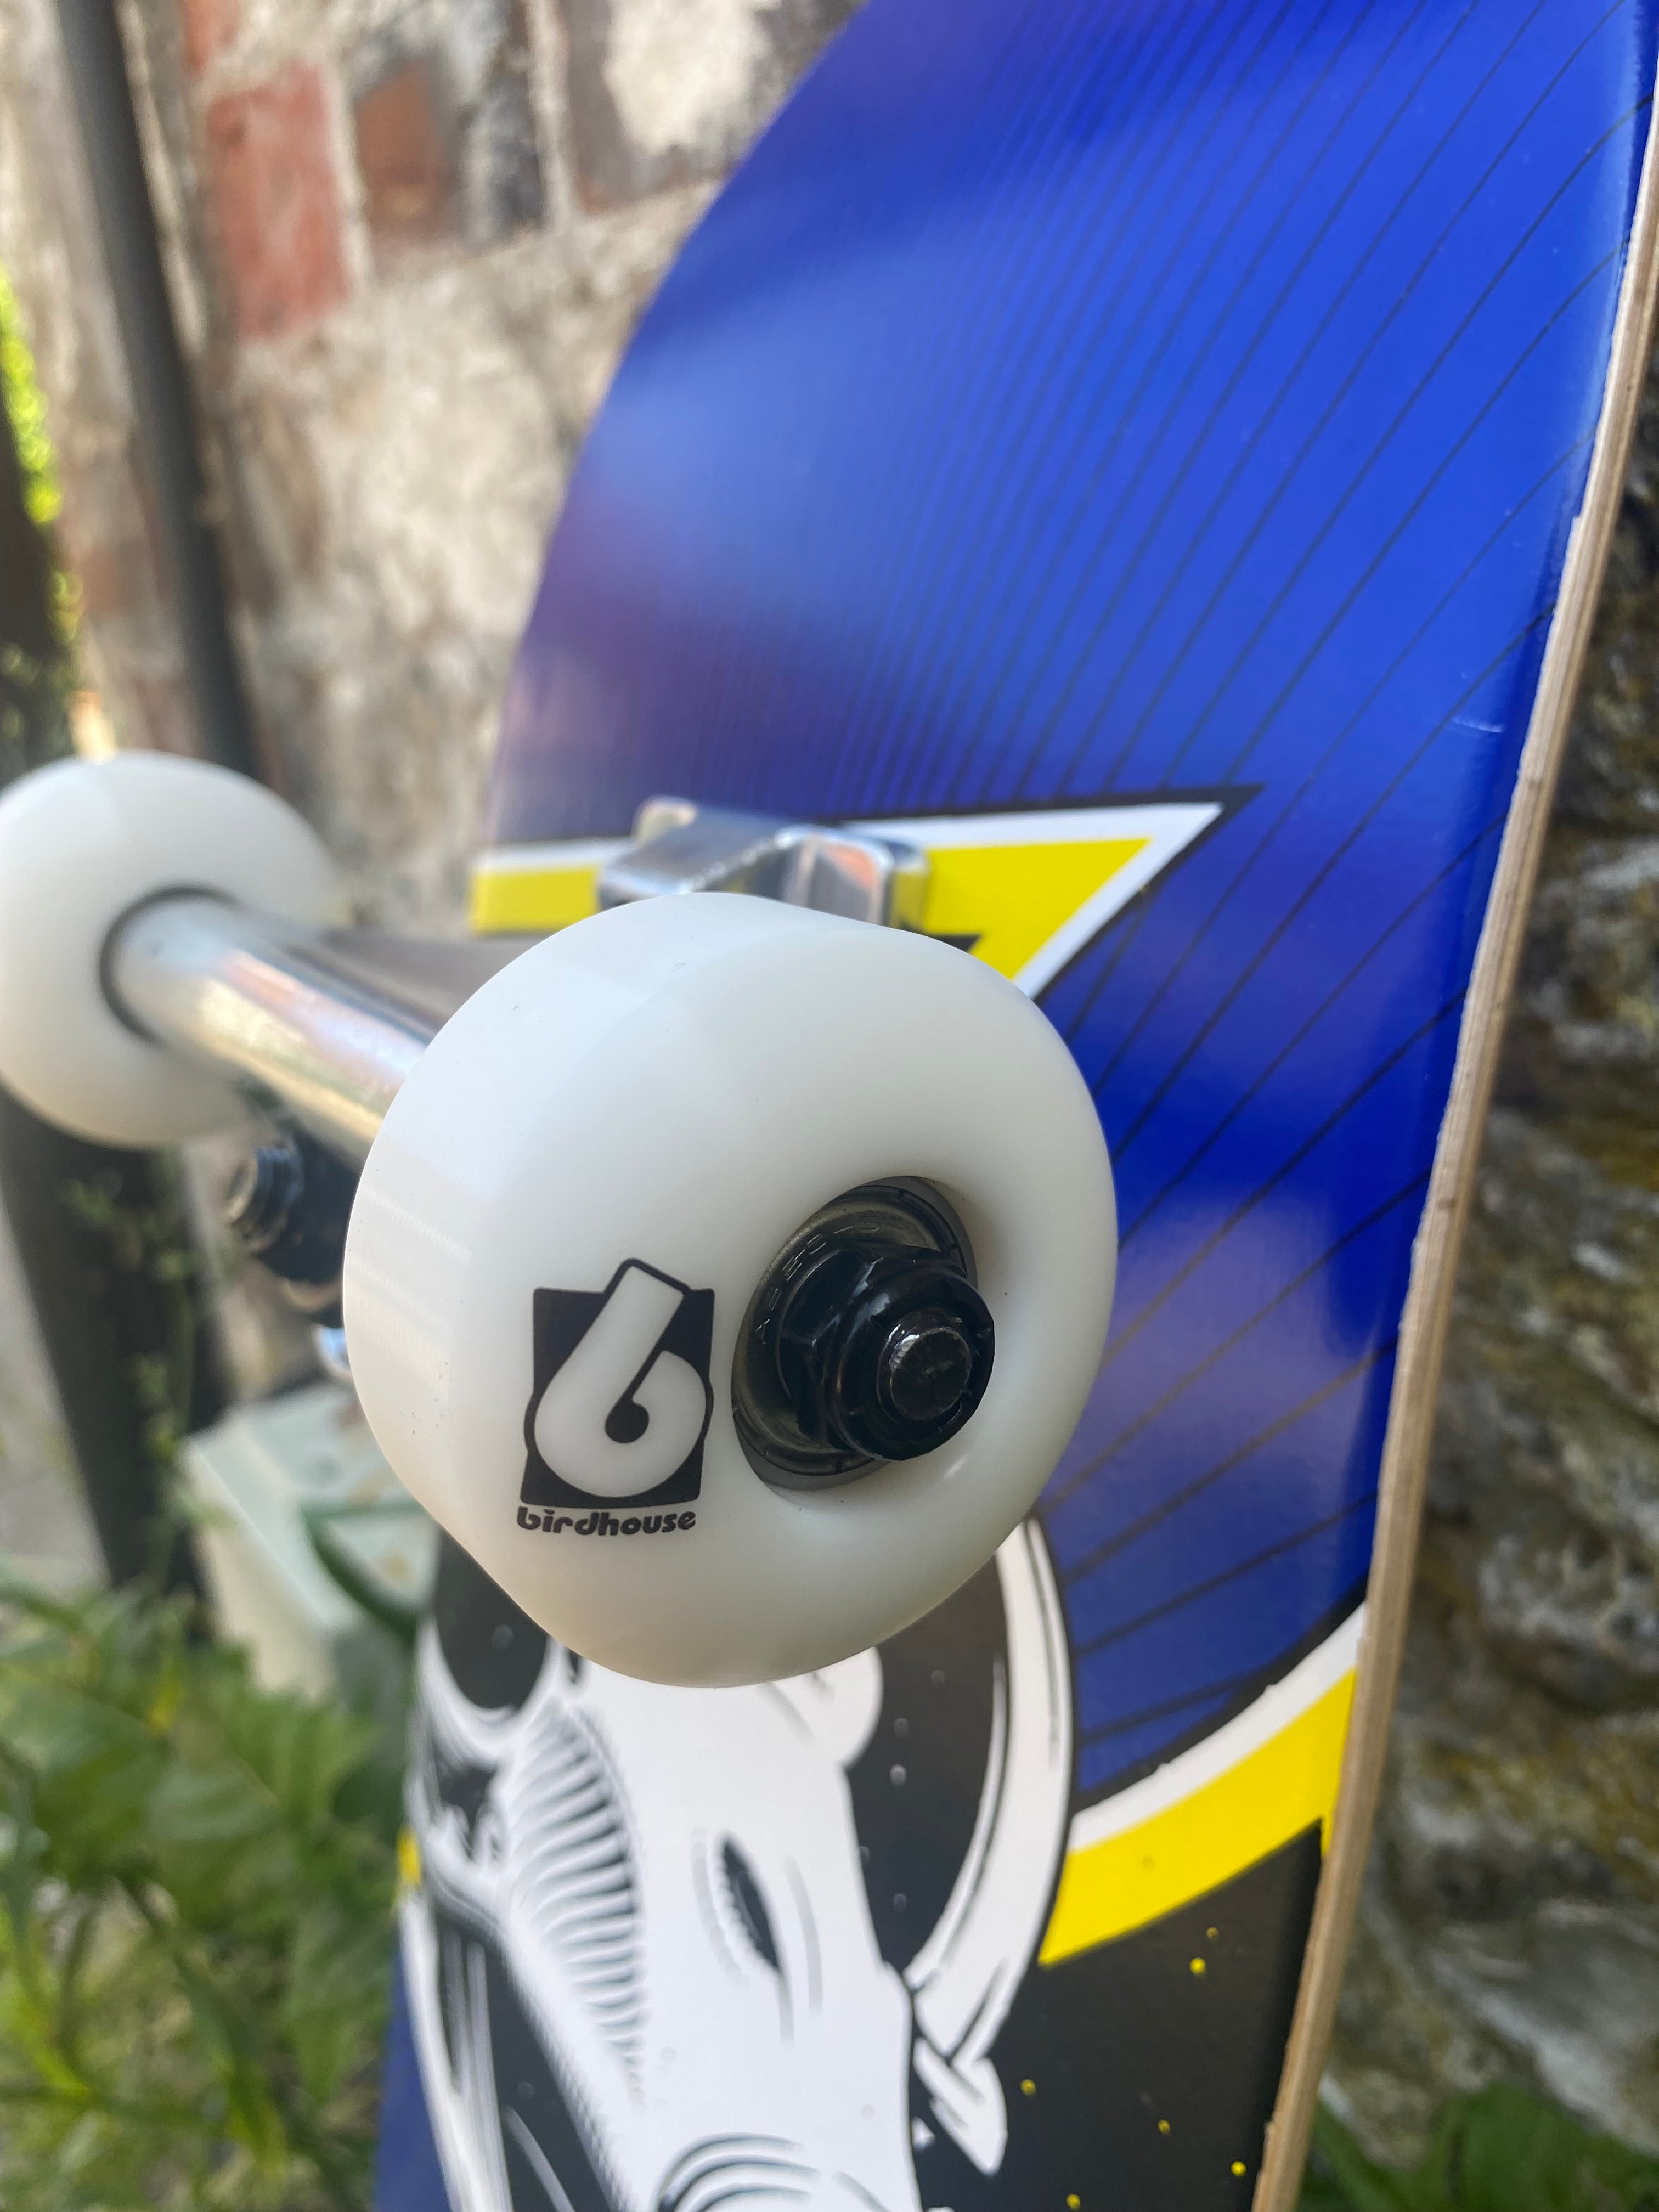 Birdhouse Oversized Skull Mini 7.25” Complete Skateboard